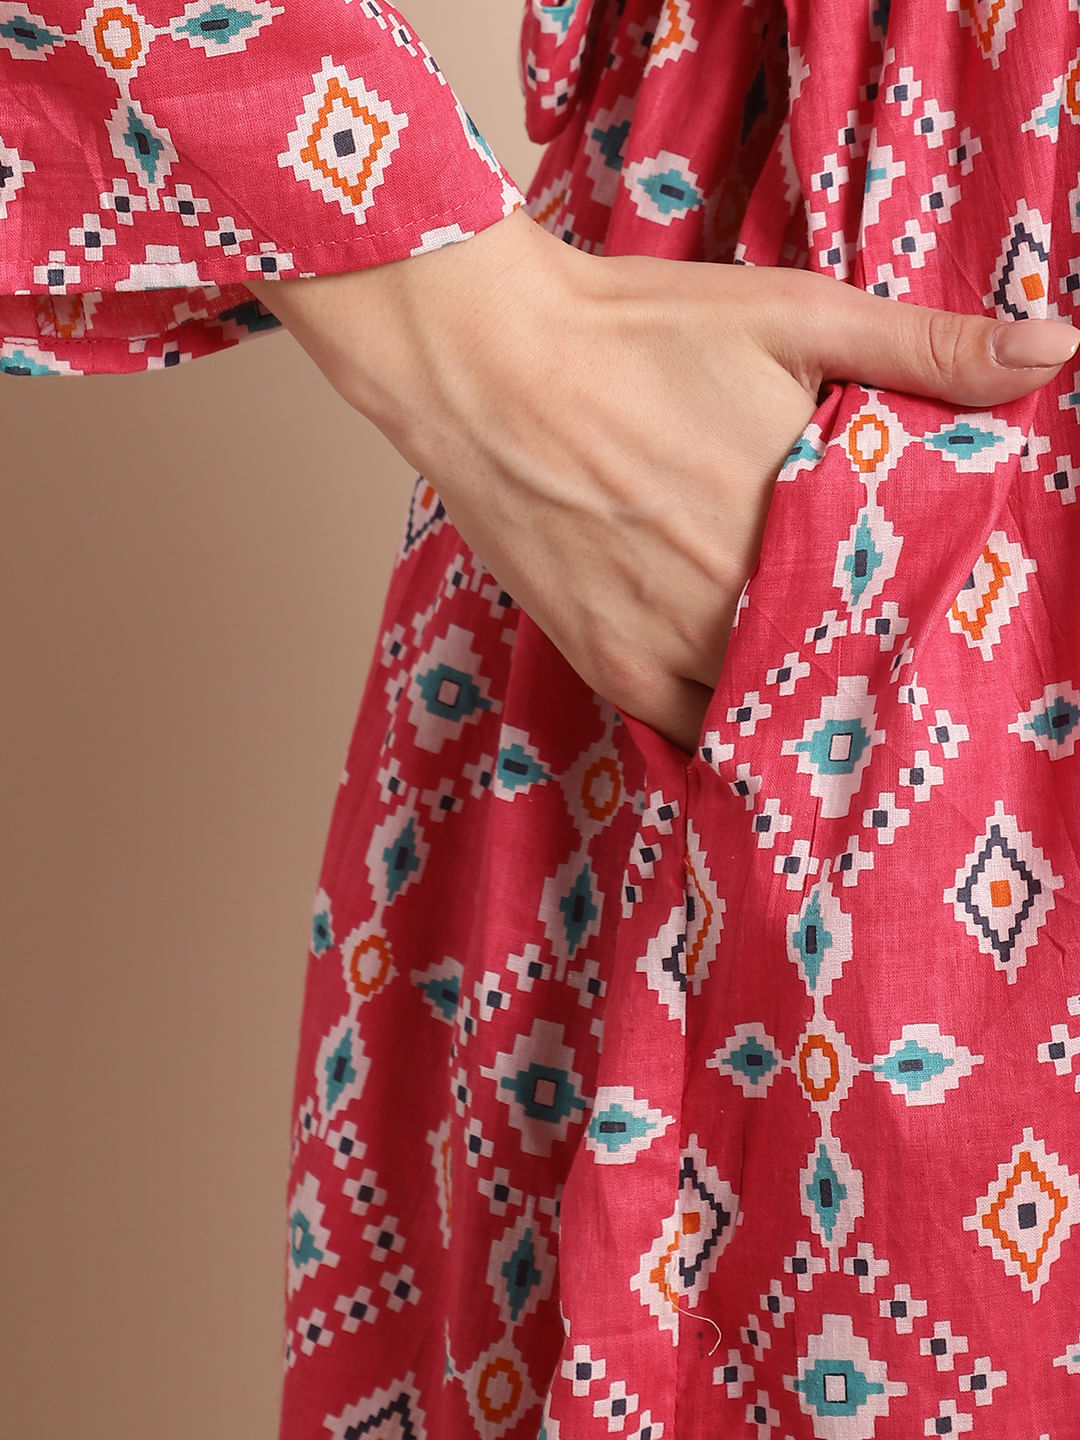 Pink Ethnic Printed Maternity Dress